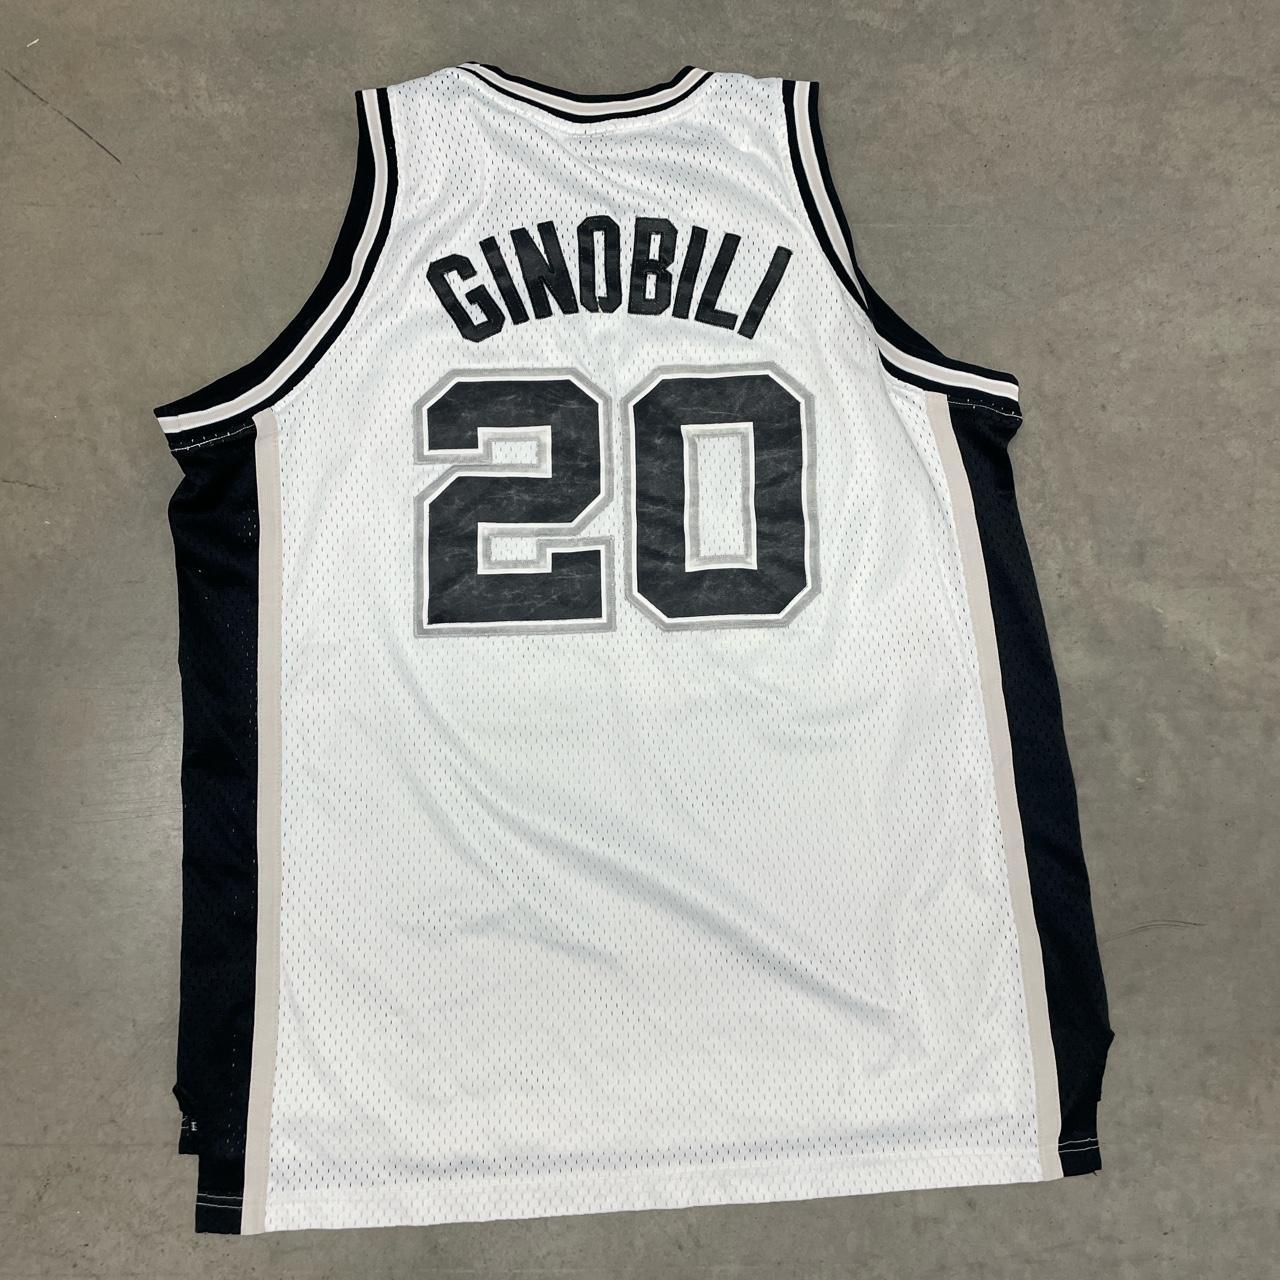 Adidas Spurs NBA jersey Ginobili 20 Moderate fading - Depop